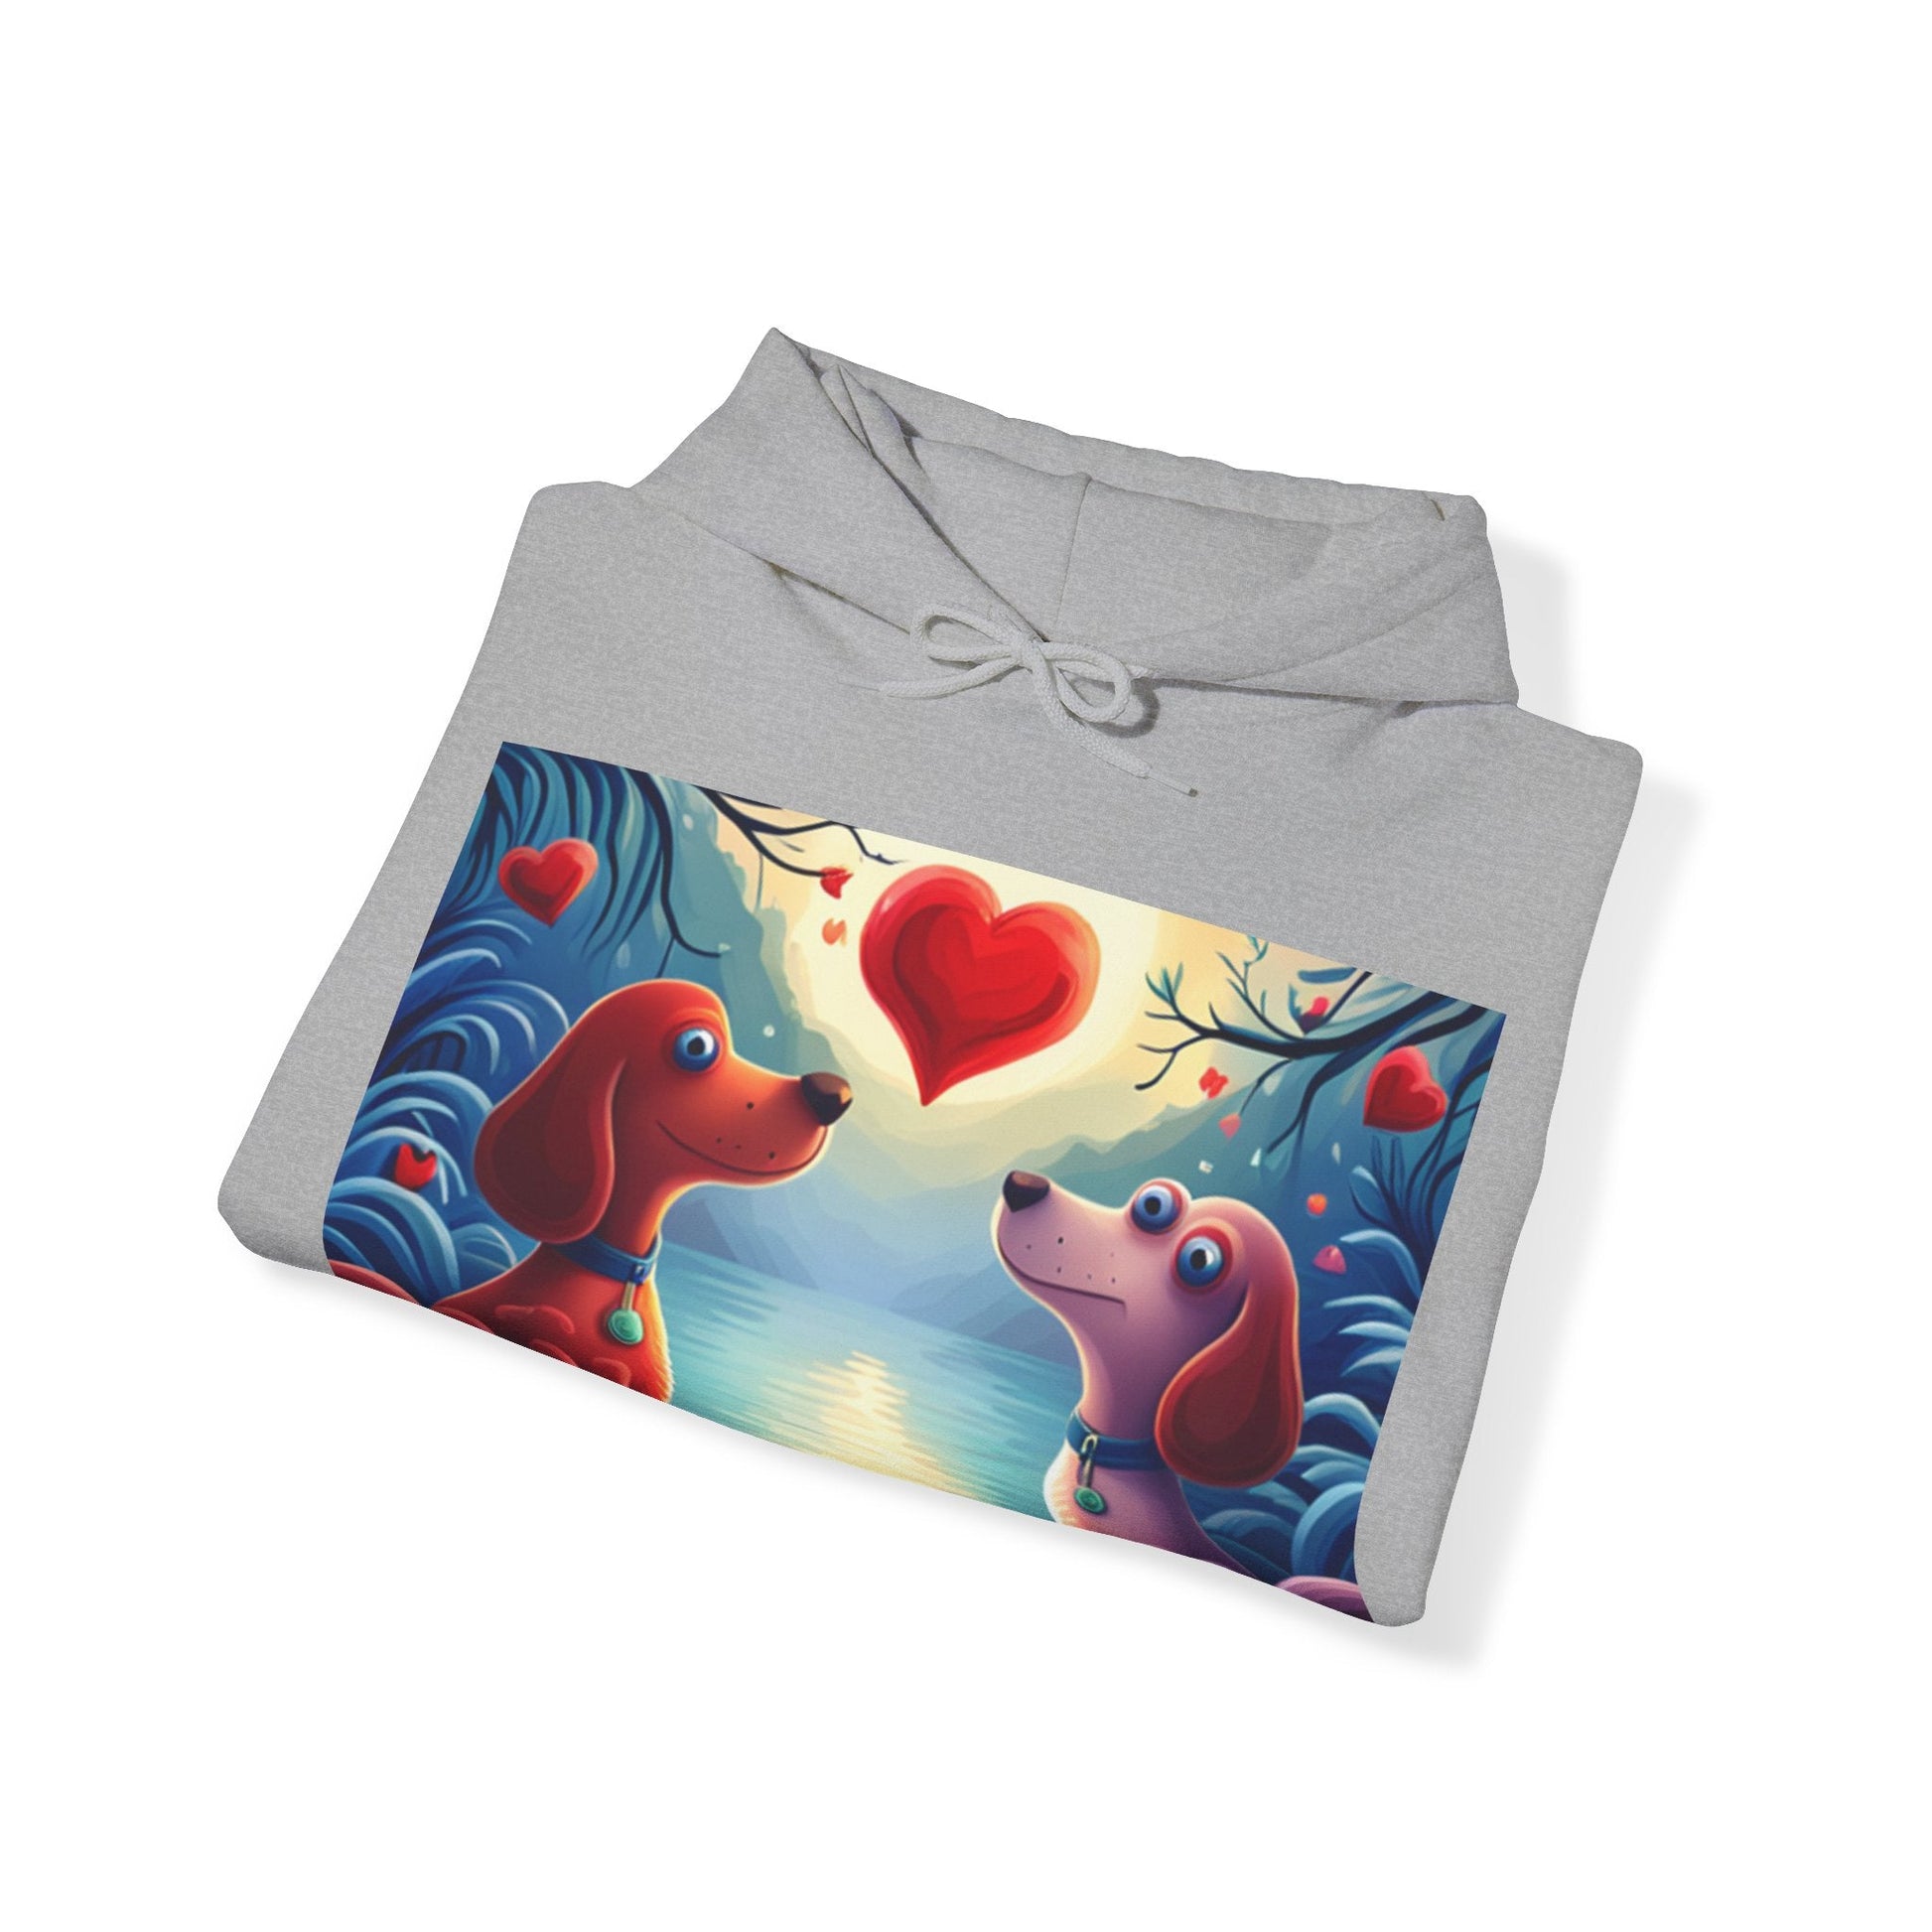 Valentine’s Day Pup Hearts Unisex Heavy Blend™ Hooded Sweatshirt - Lizard Vigilante